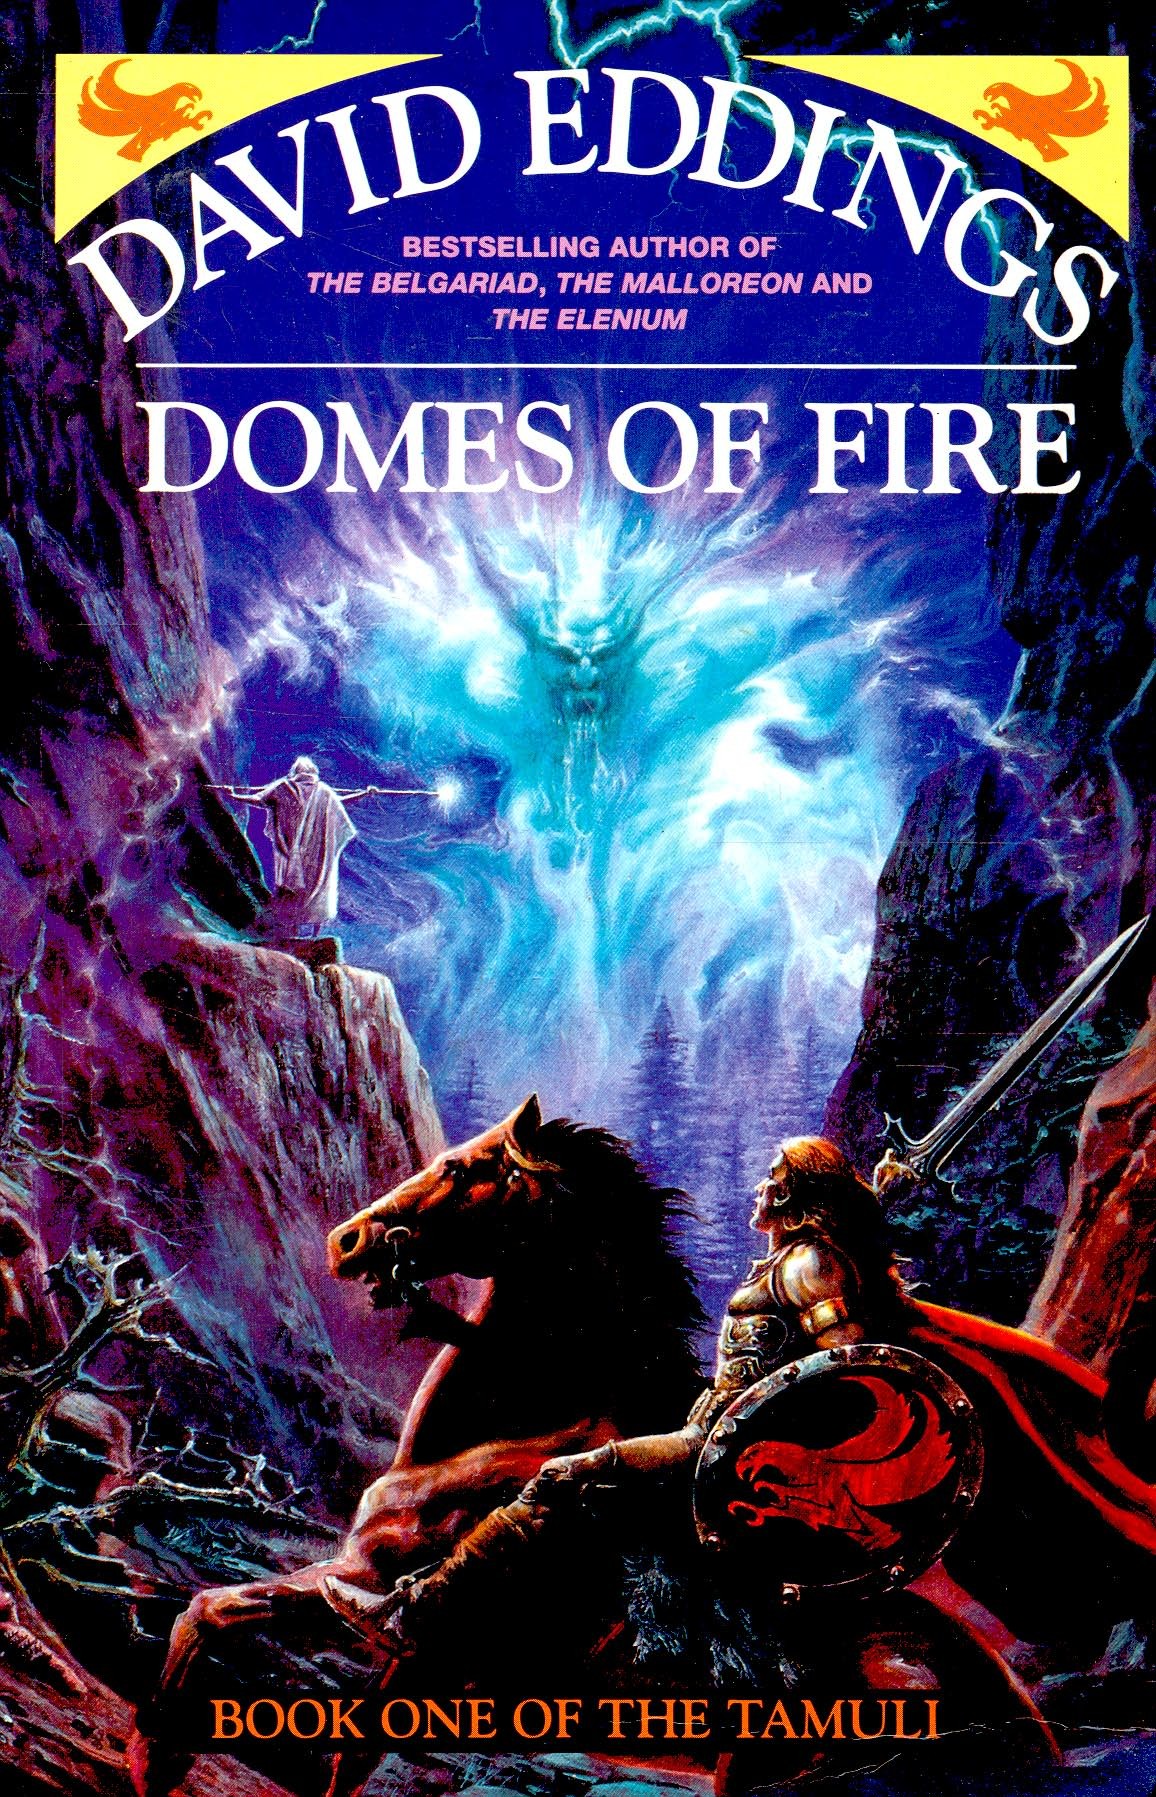 David Eddings: Domes of Fire (1993, Del Rey)